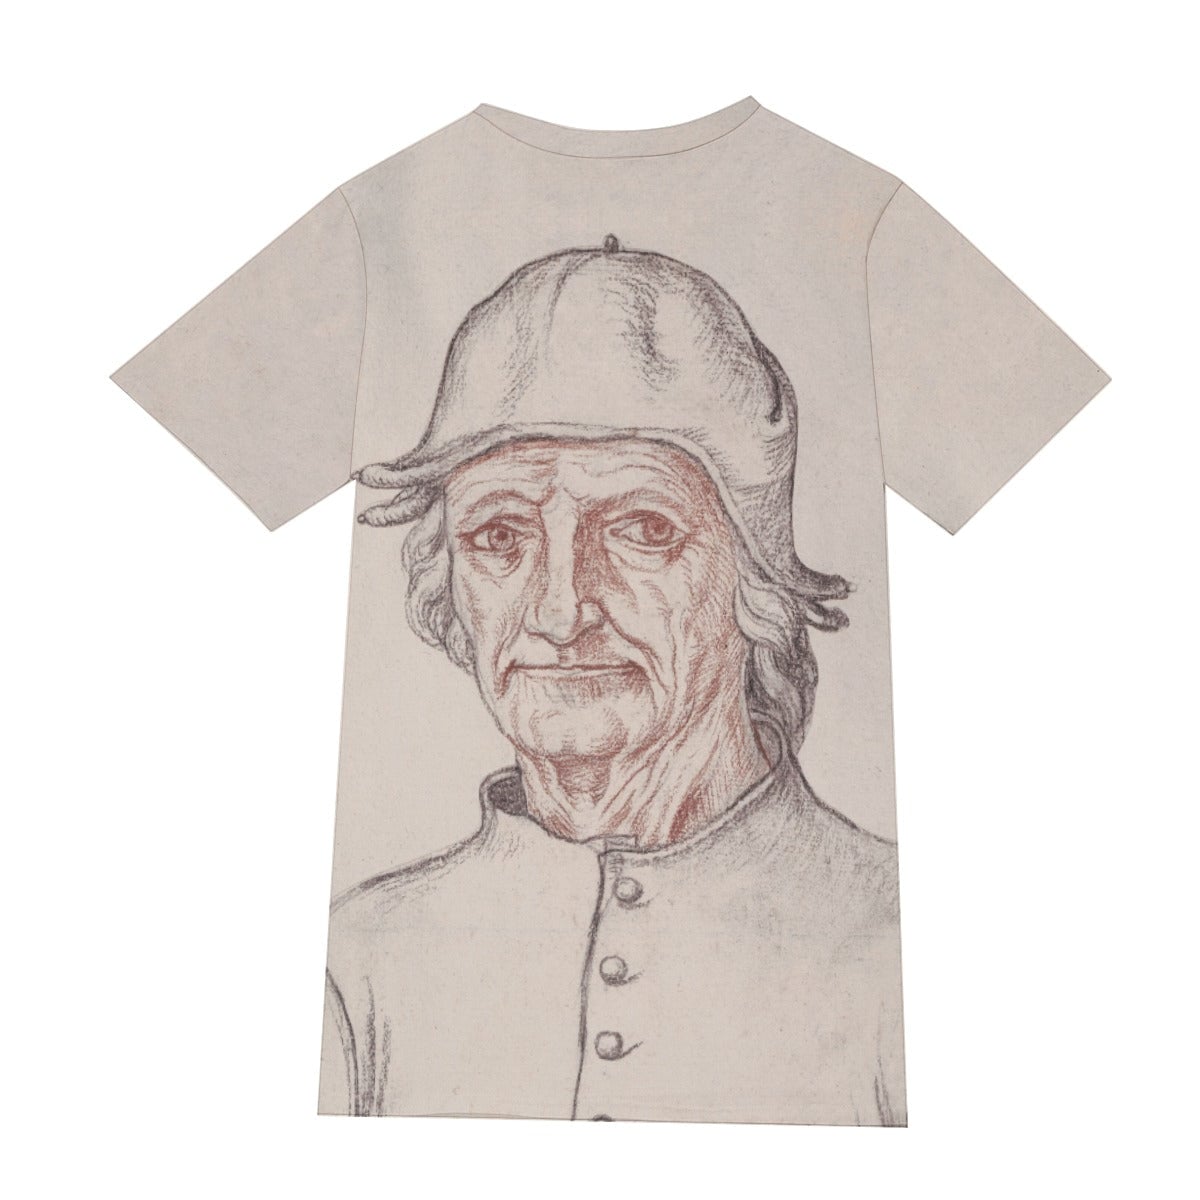 Hieronymus Bosch Portrait Drawing T-Shirt